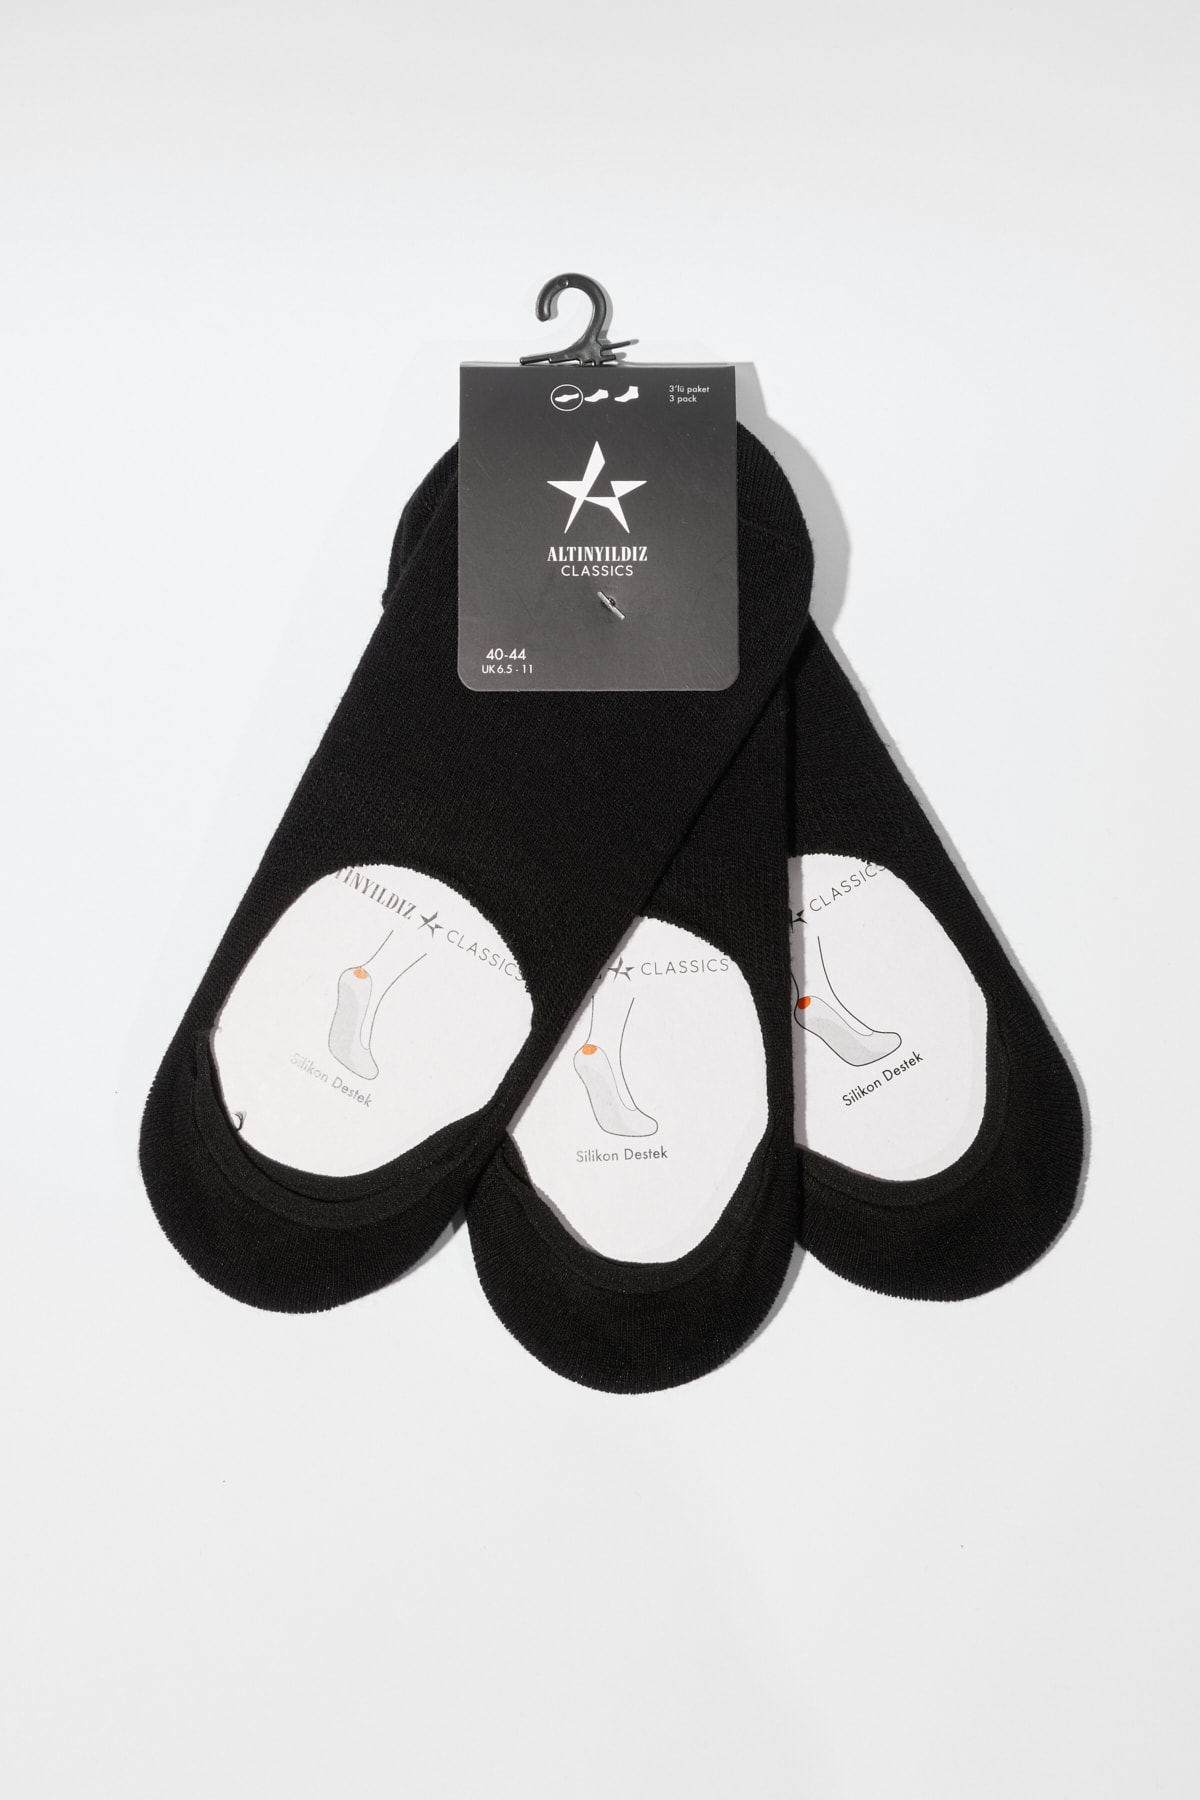 ALTINYILDIZ CLASSICS Men's Black 3-Piece Silicone Heel Supported Ballerina Socks